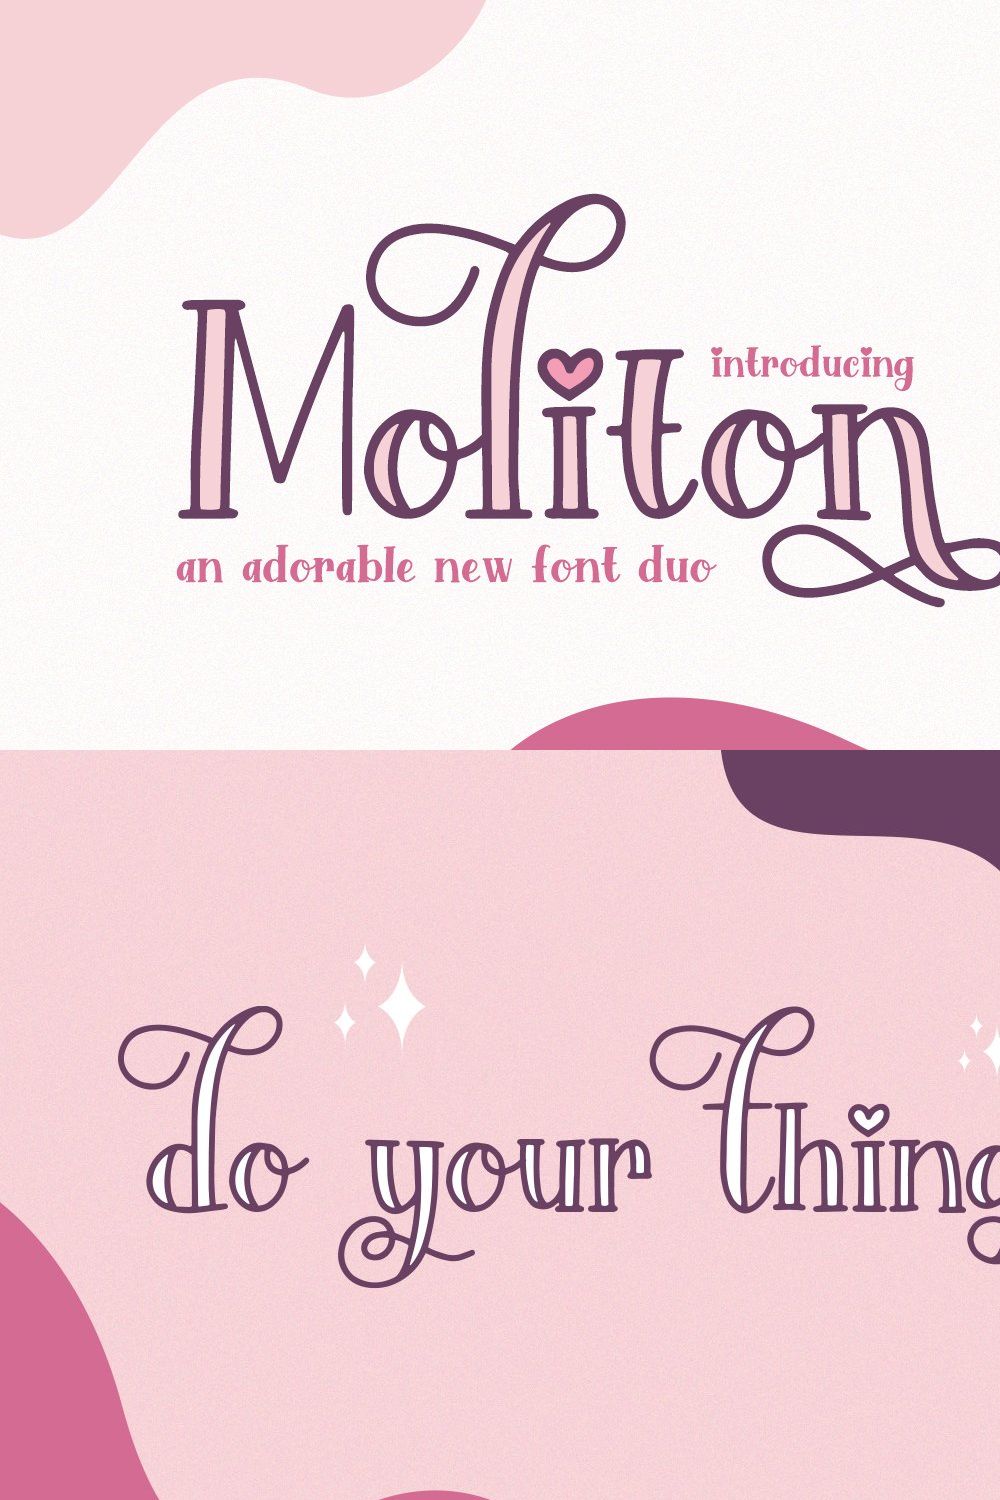 Moliton Serif Font Duo pinterest preview image.